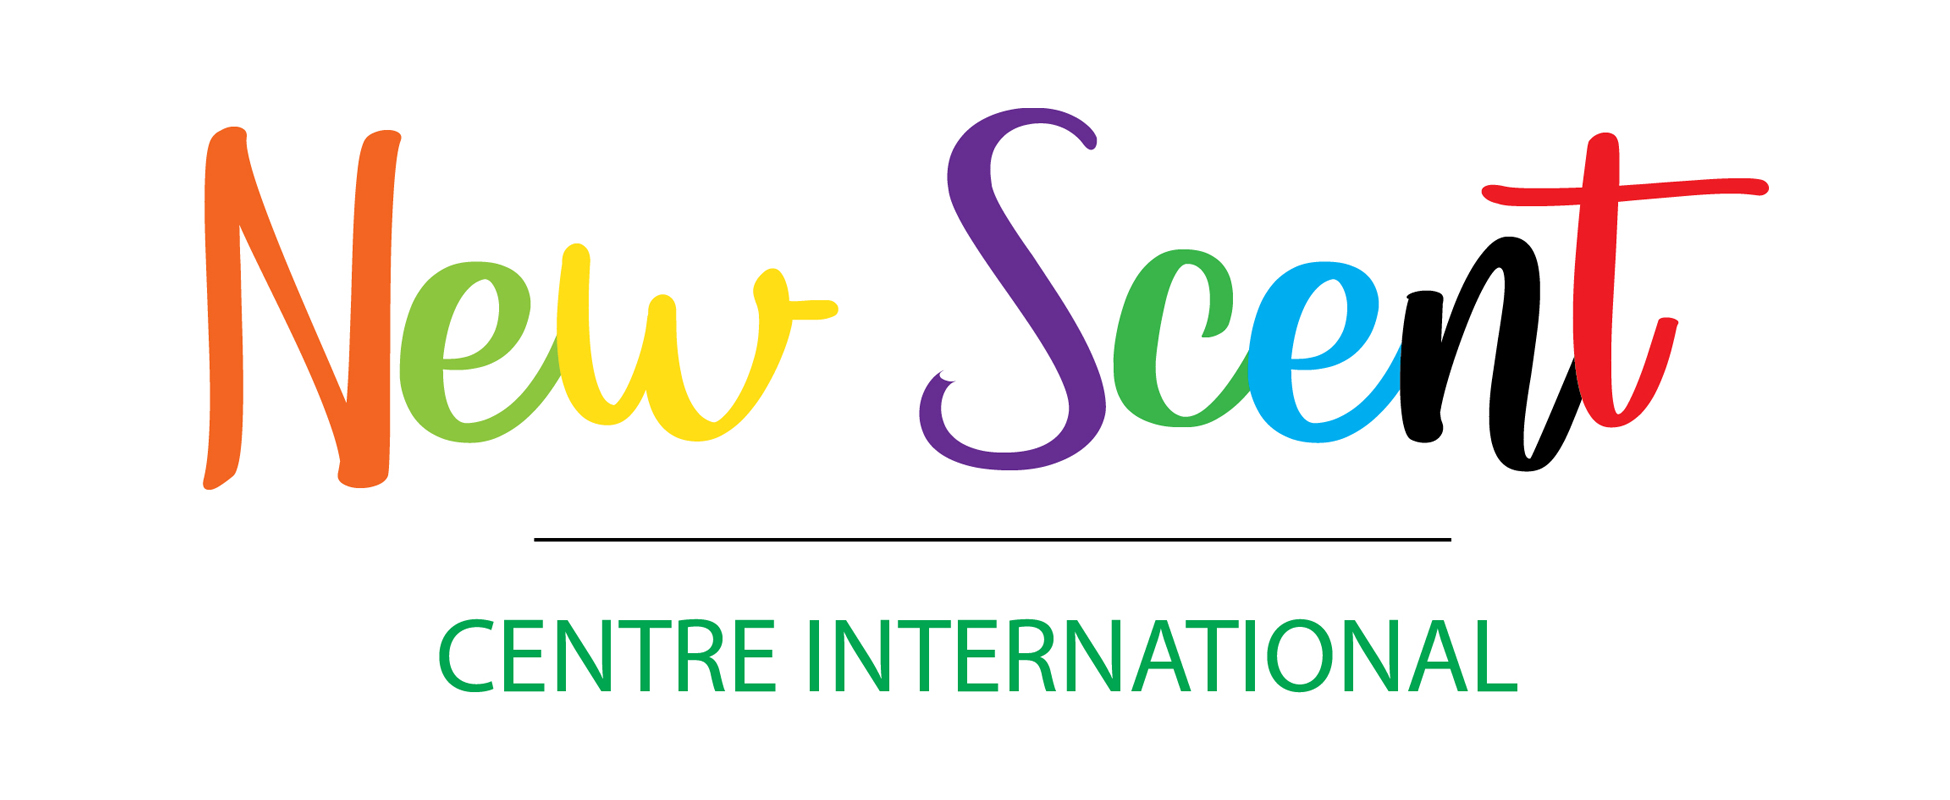 New Scent Logo